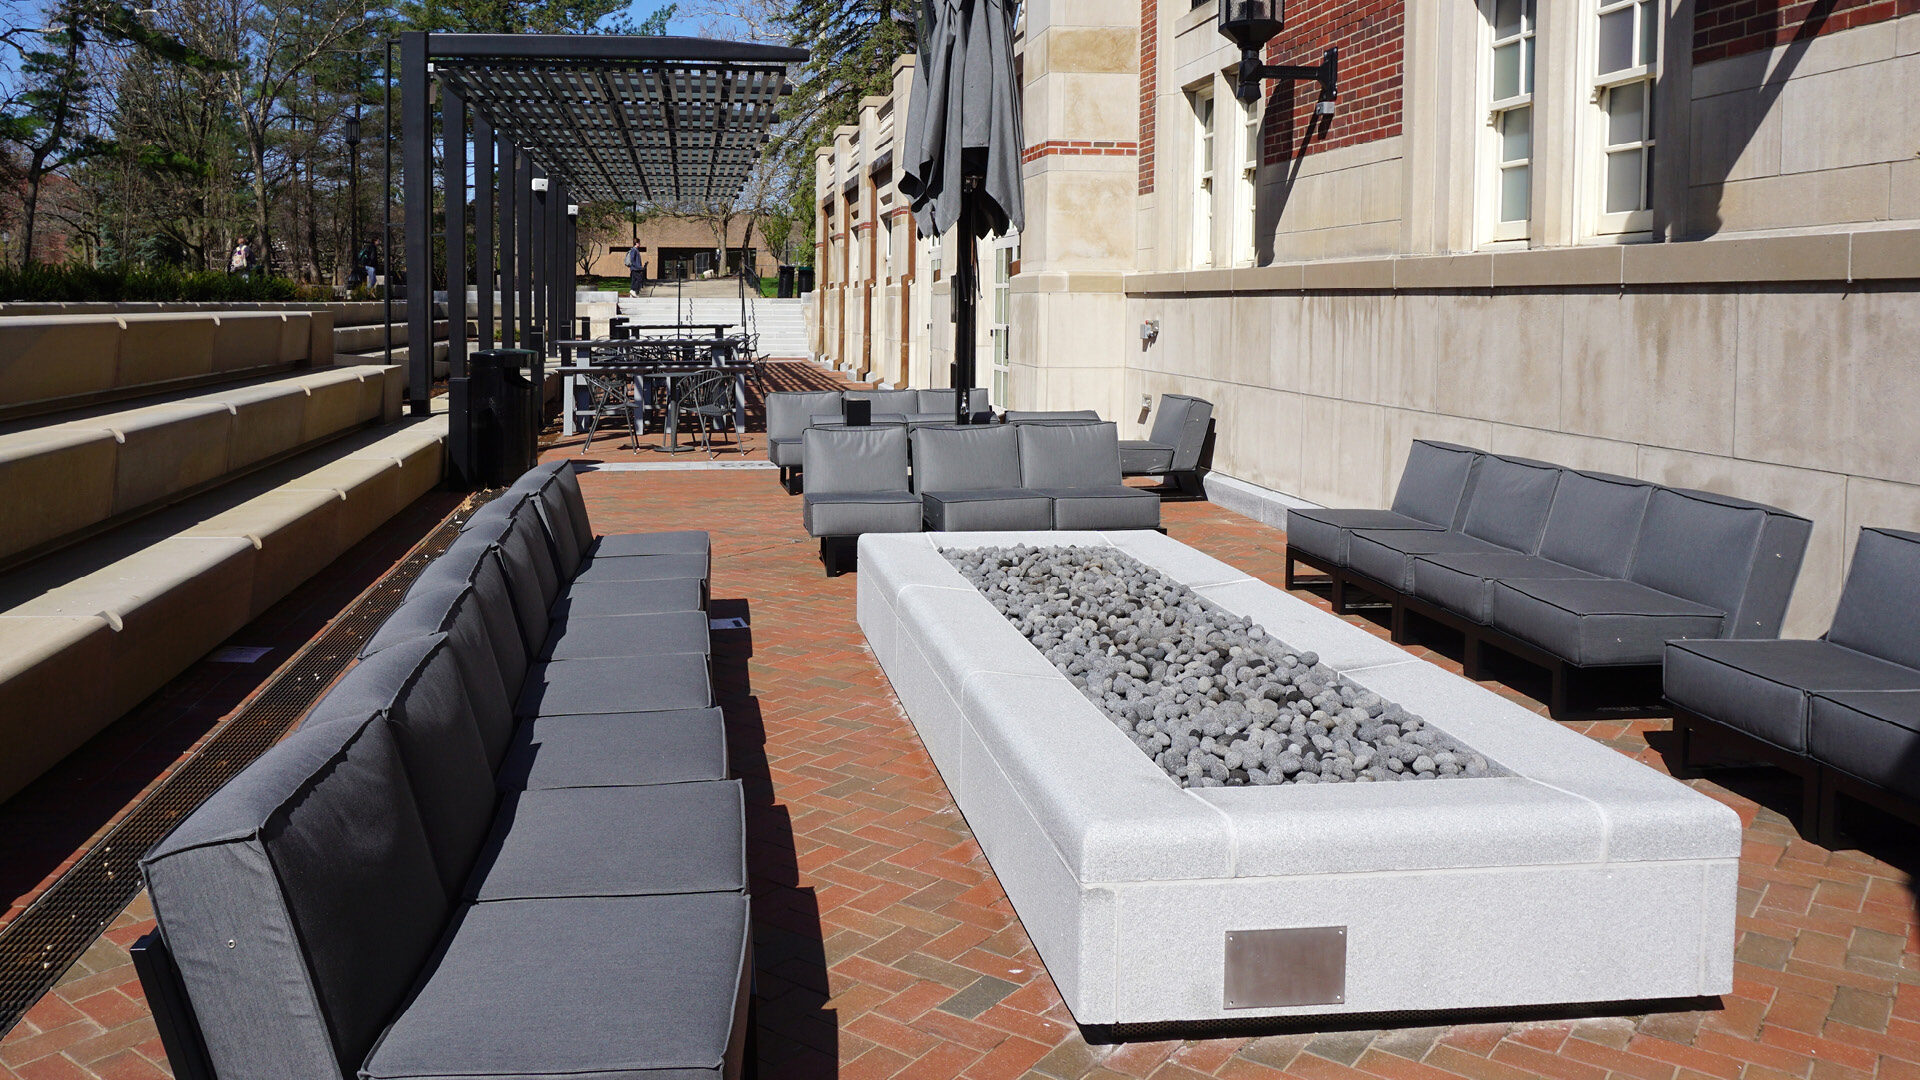 New outdoor terraces at Purdue Memorial Union